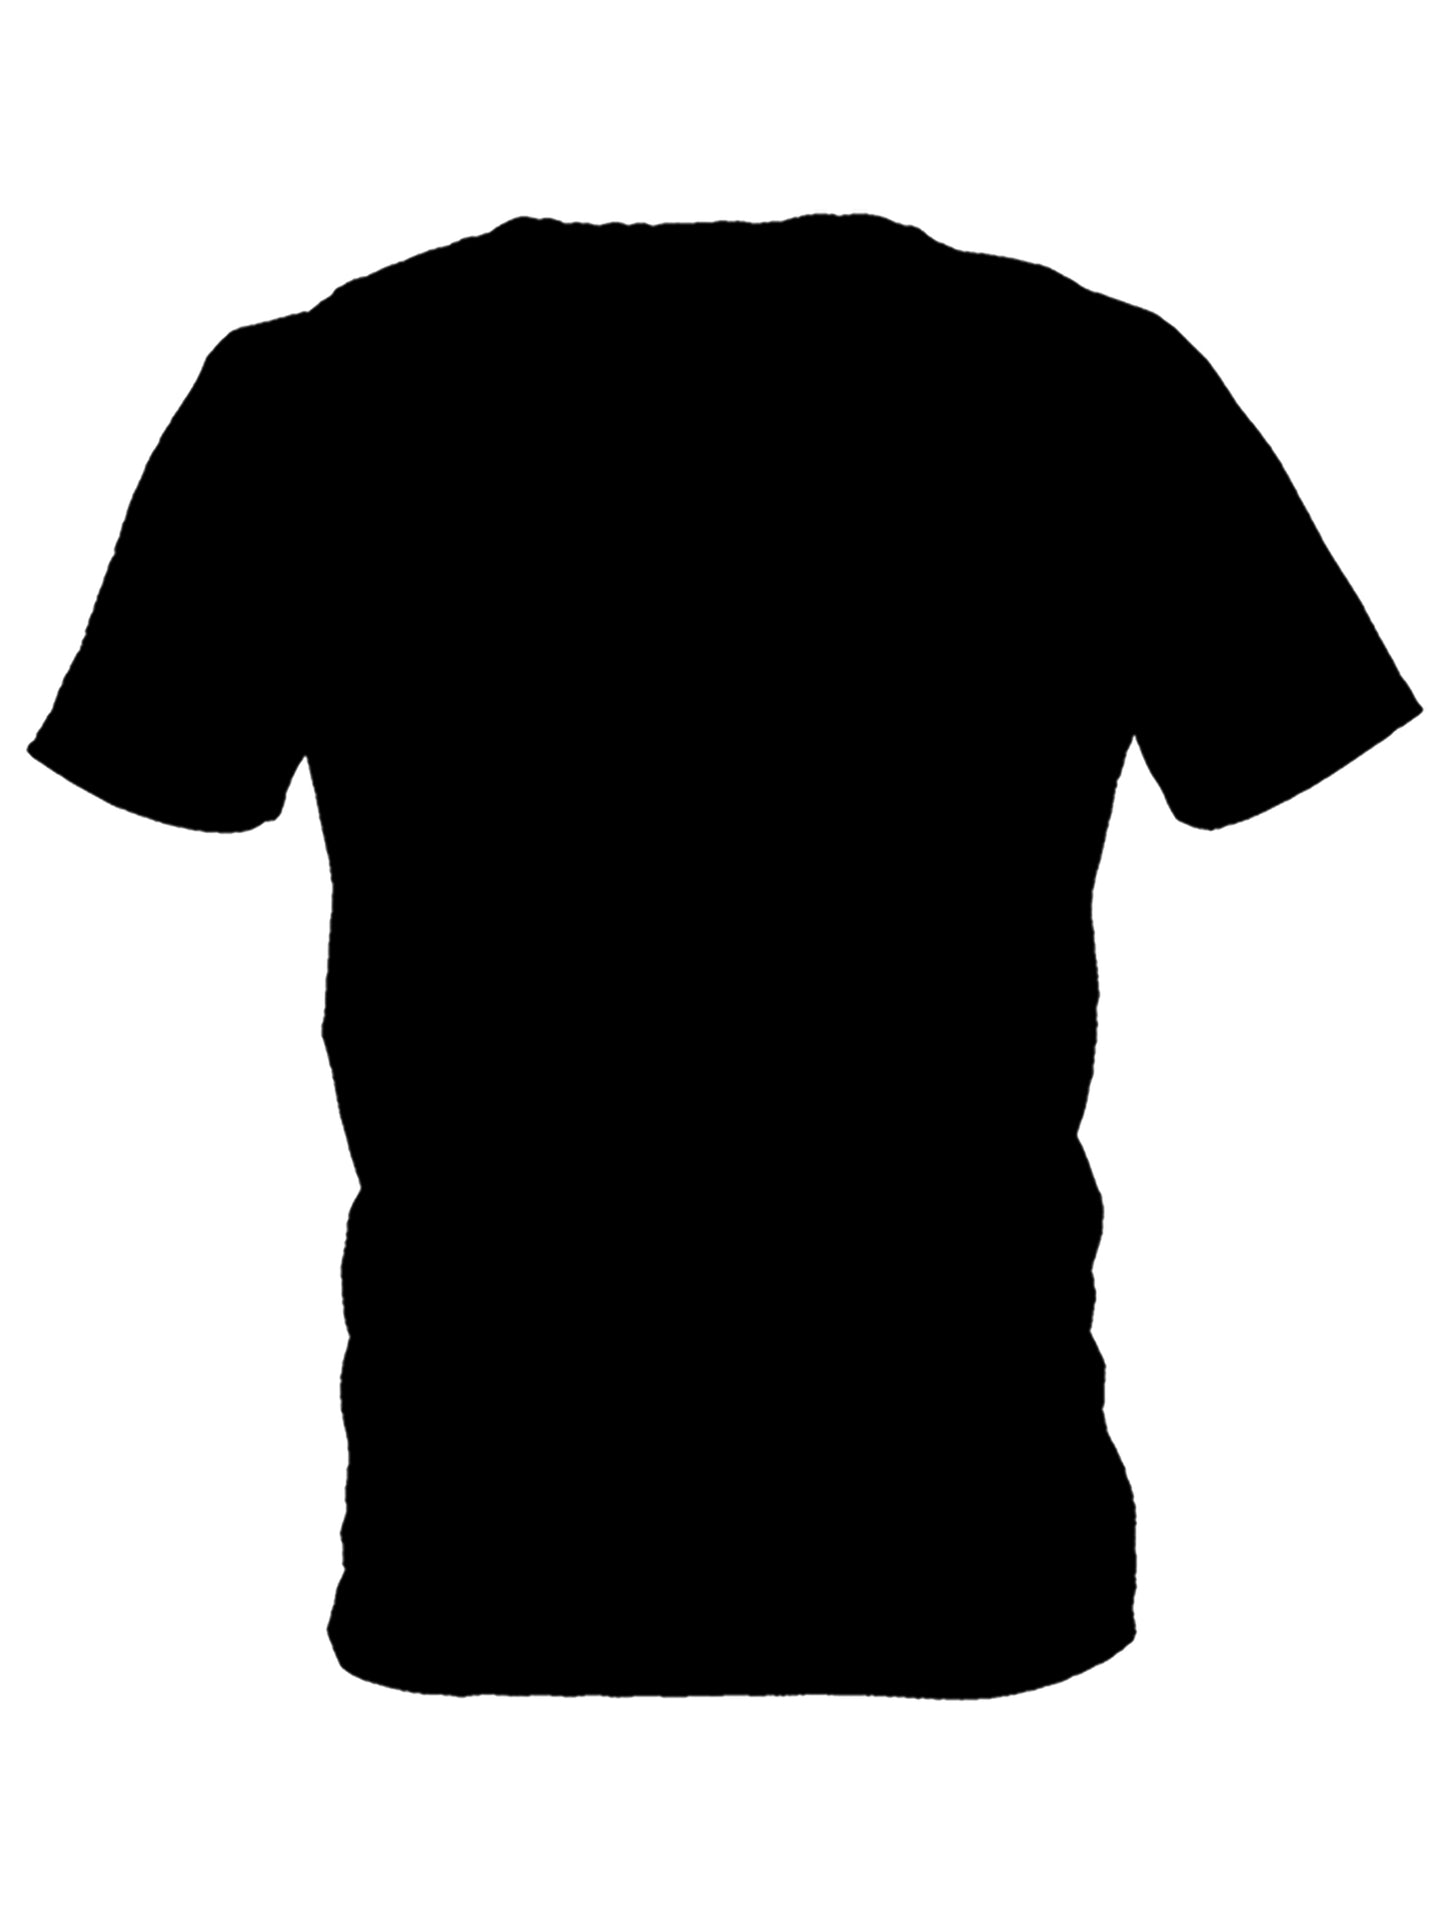 Lightyears Away Men's Graphic T-Shirt, iEDM, | iEDM